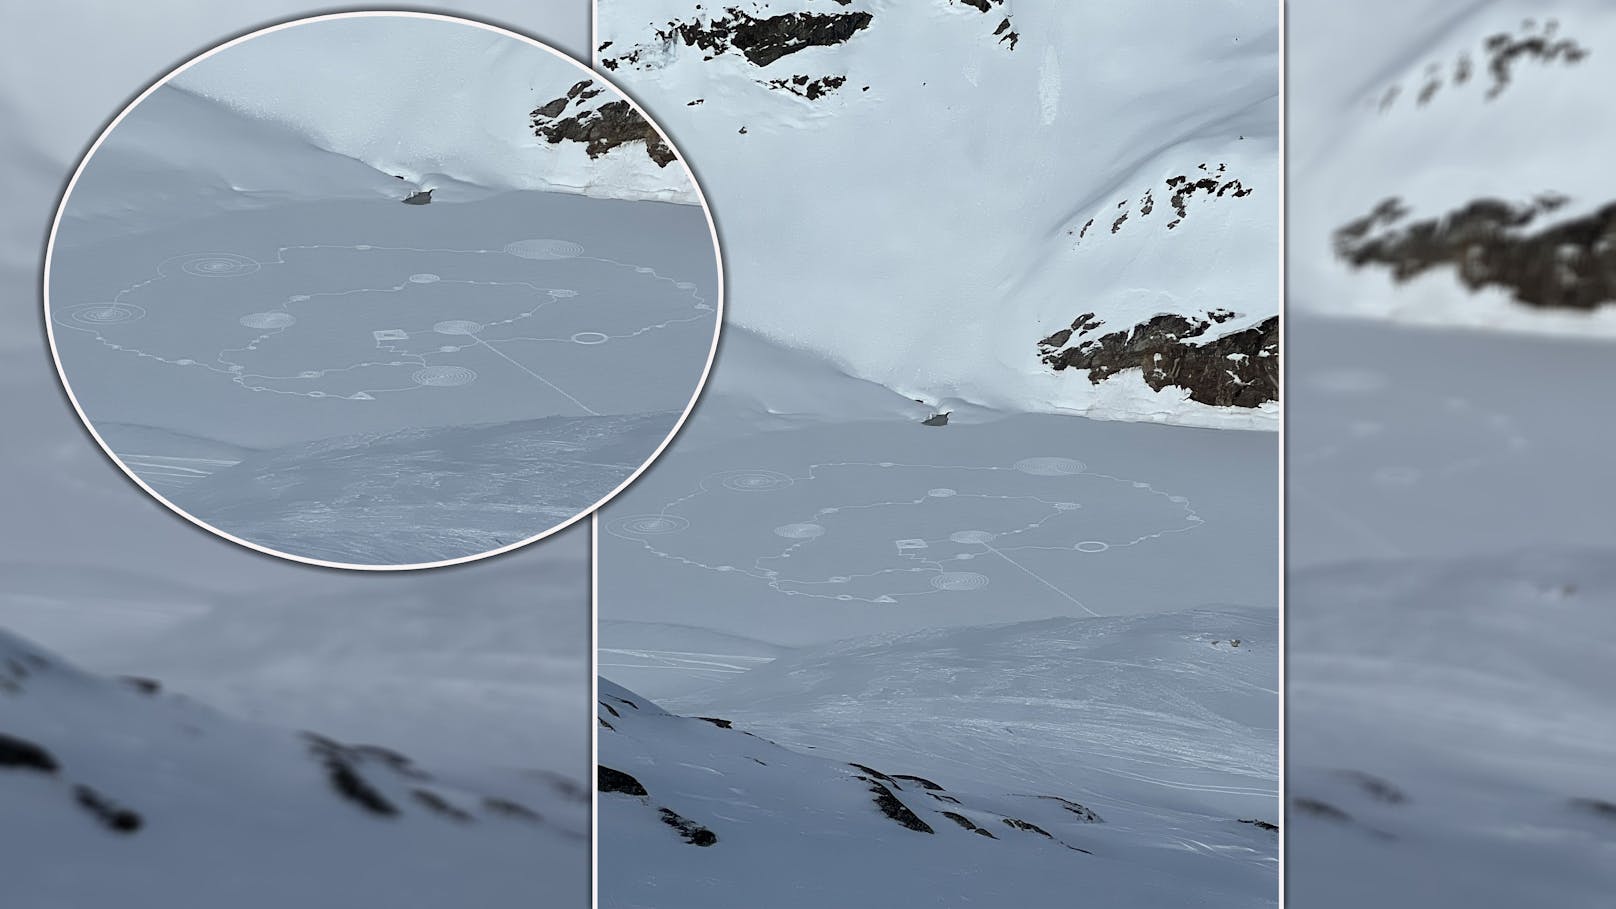 Alien-Alarm in Alpen! Mysteriöse Kreise entdeckt